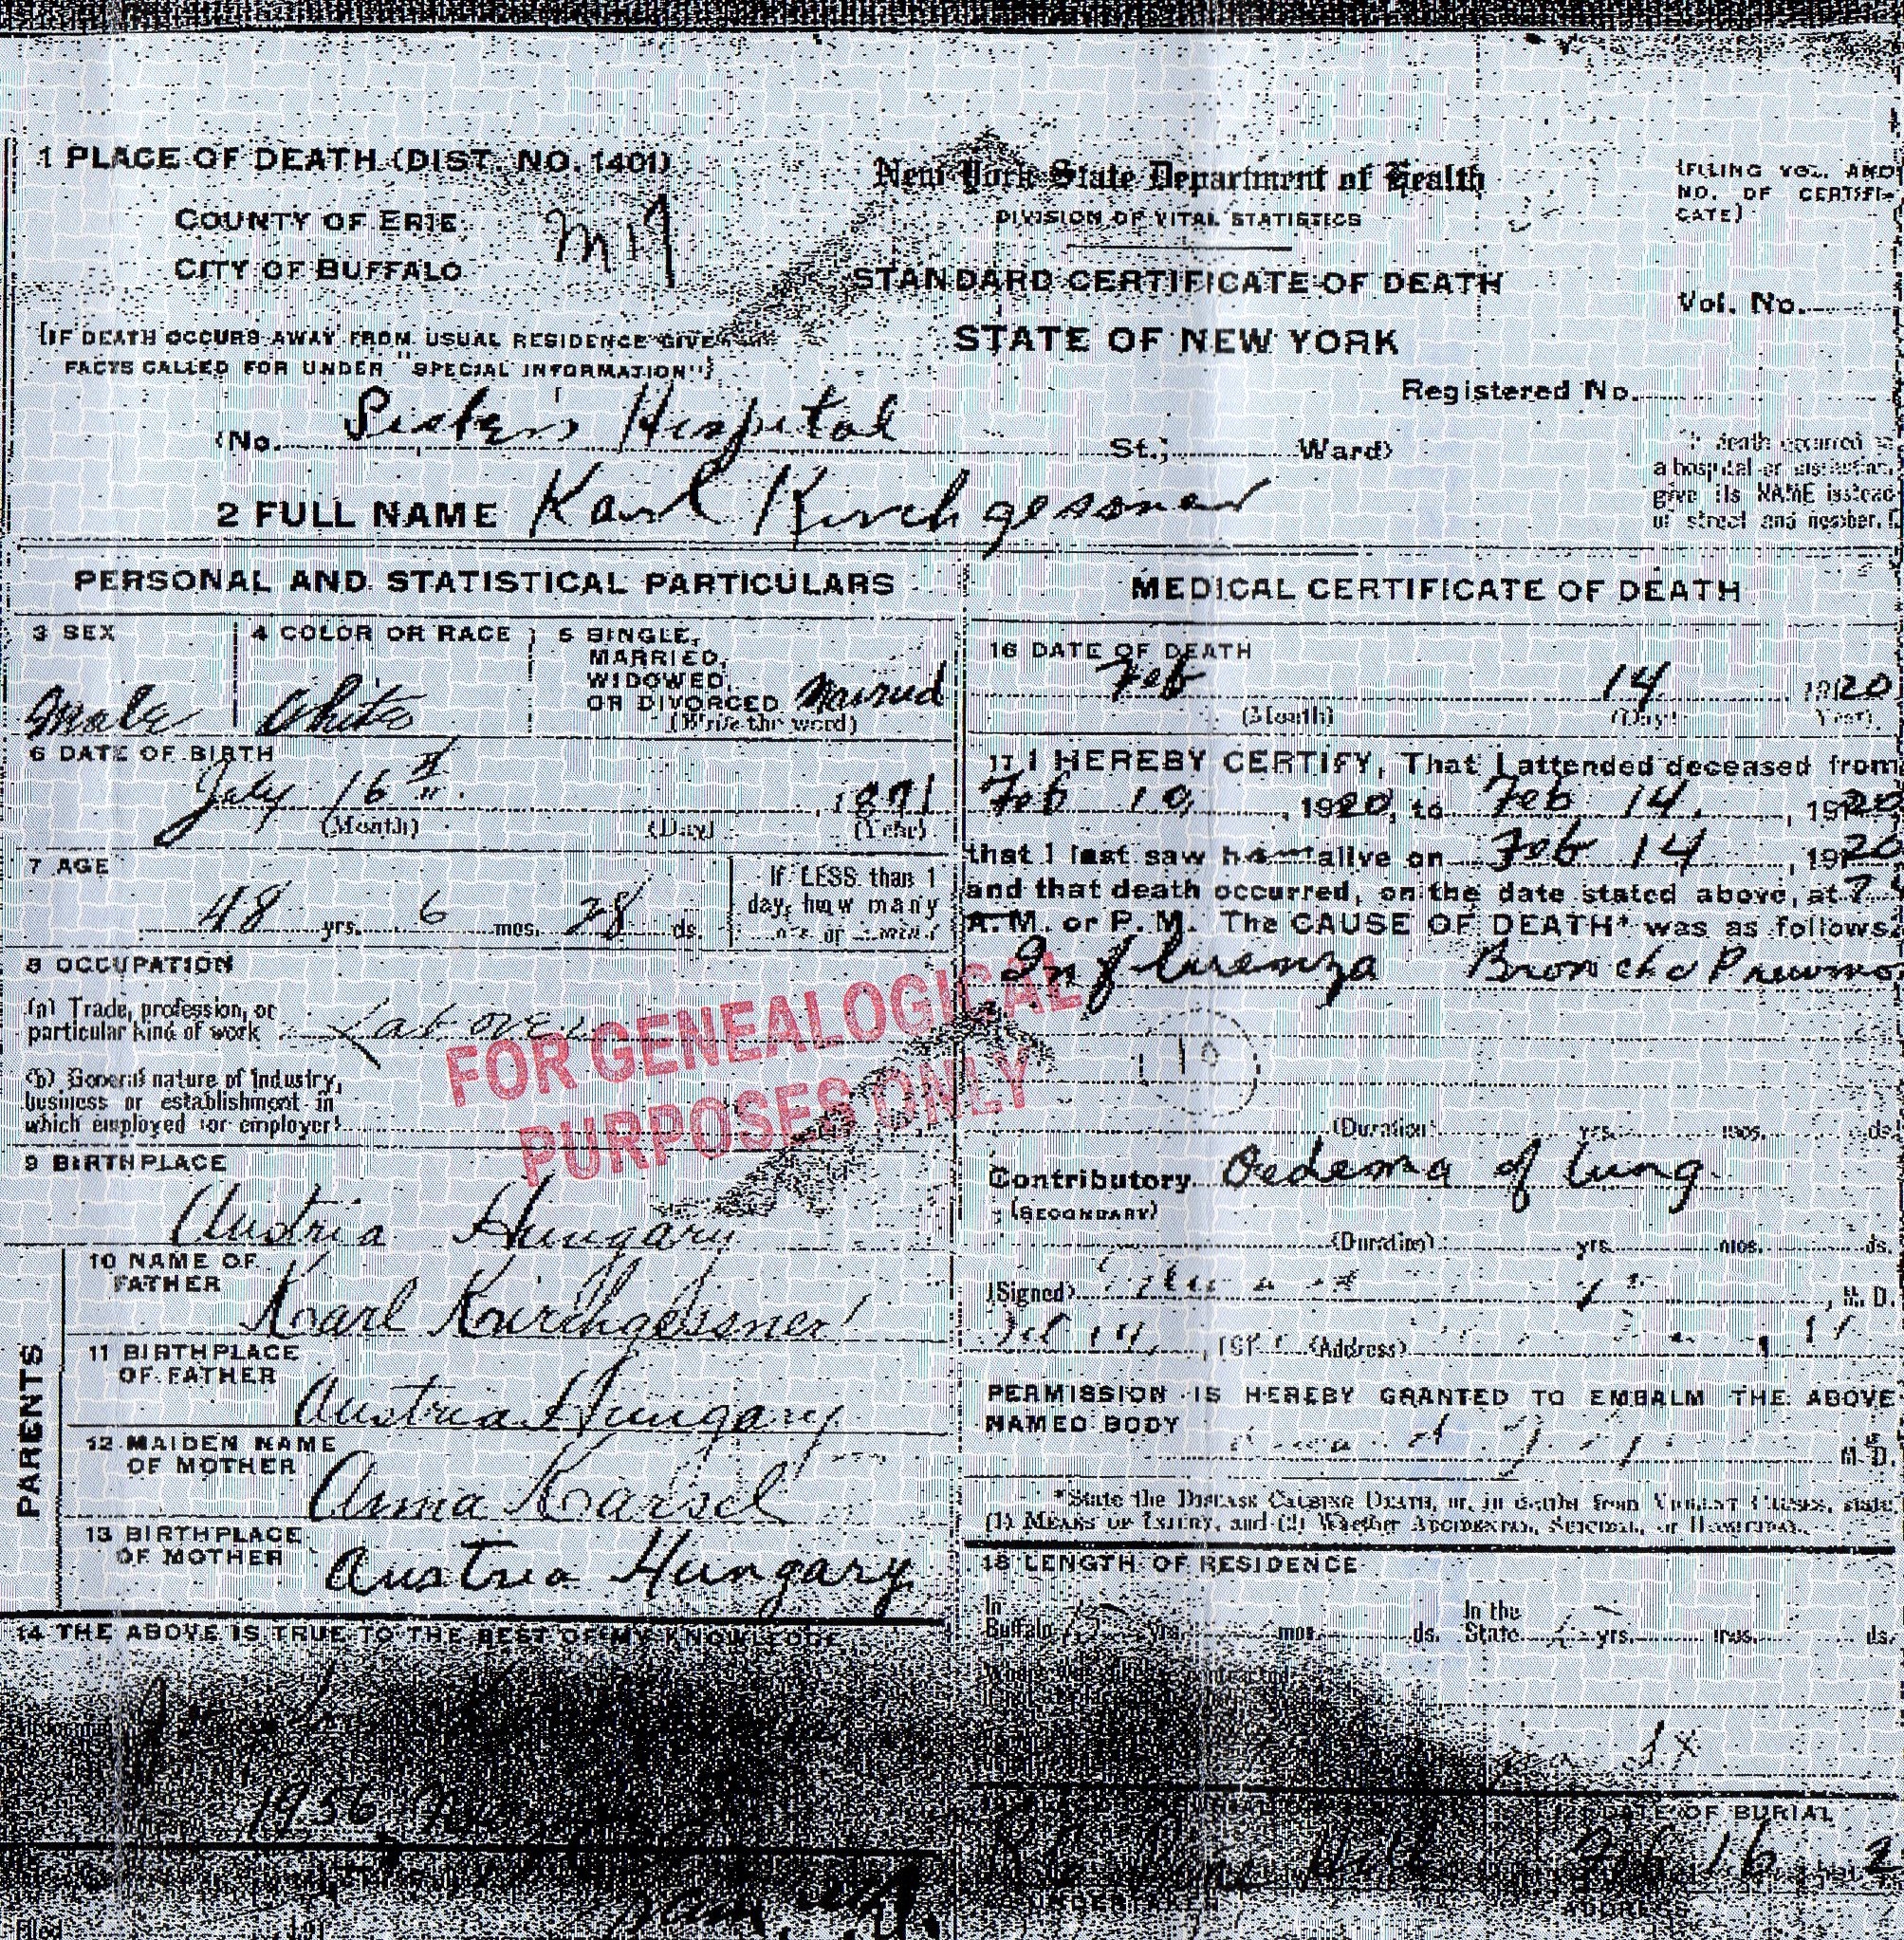 Karl Kirchgassner death certificate